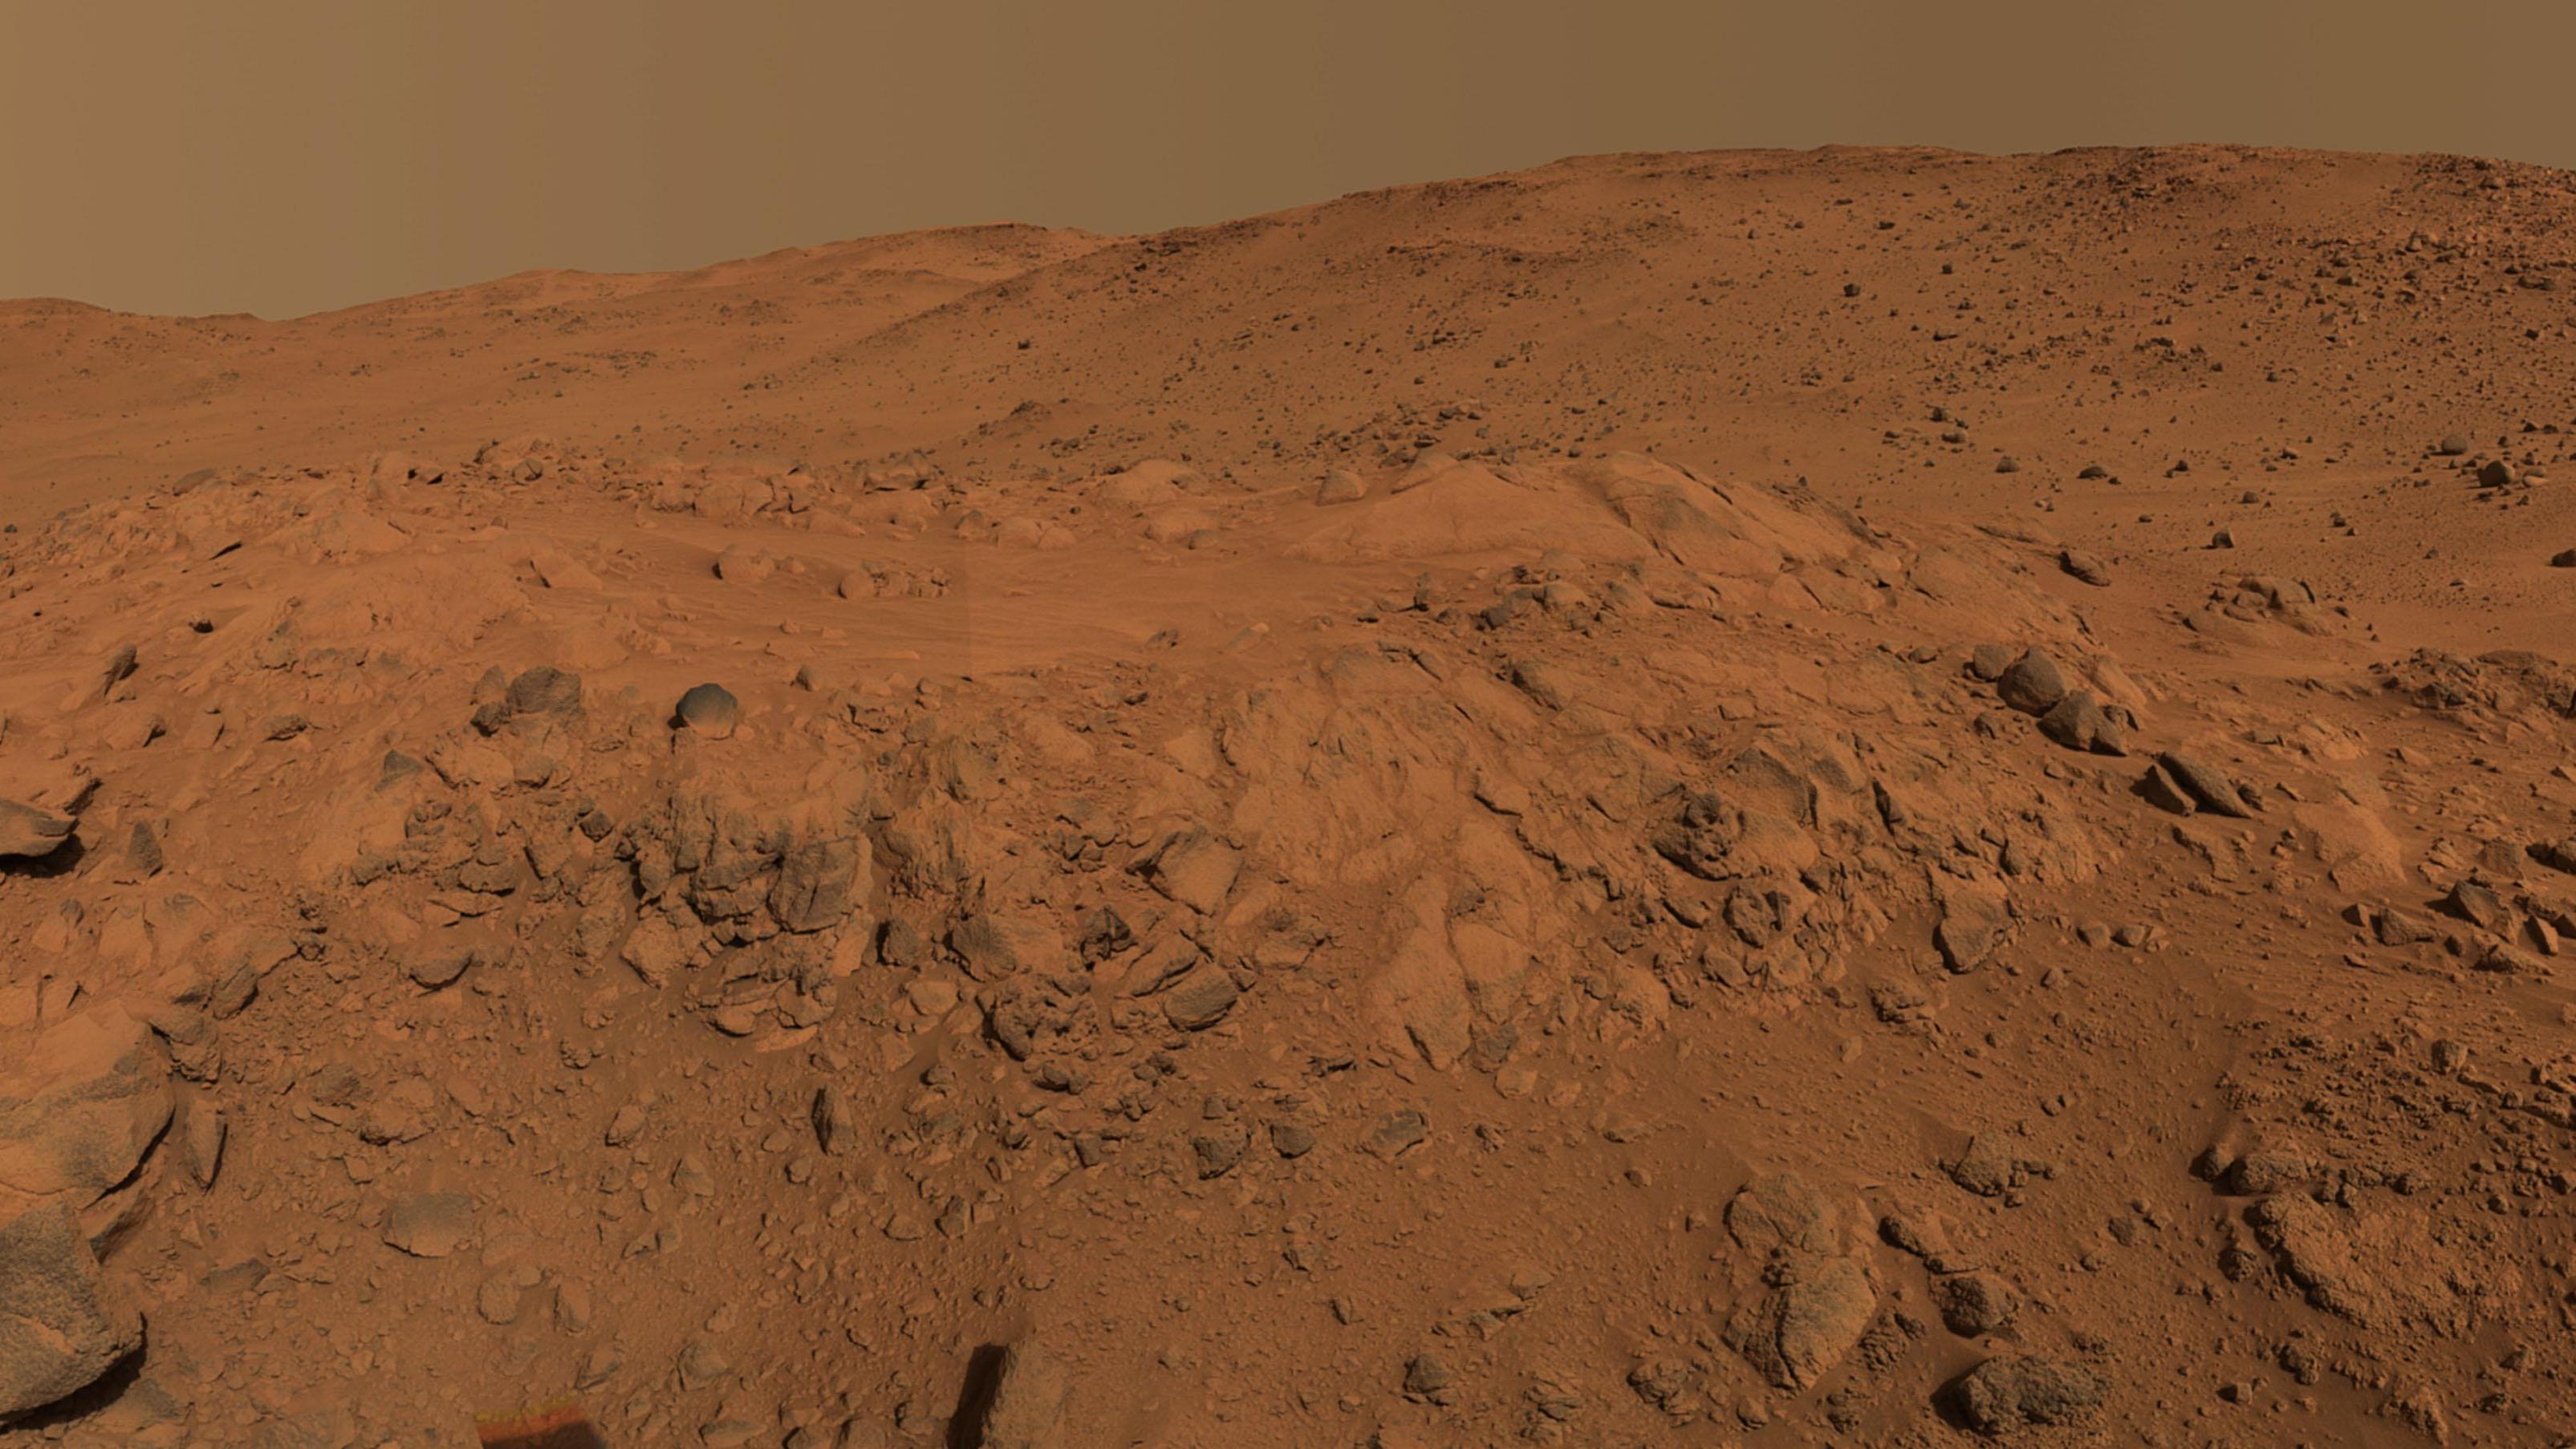 Terre de mars. Марсоход снимки Марса 2023. Кларк. Пески Марса, 1993. Марс Планета внутри. Ядро планеты Марс.